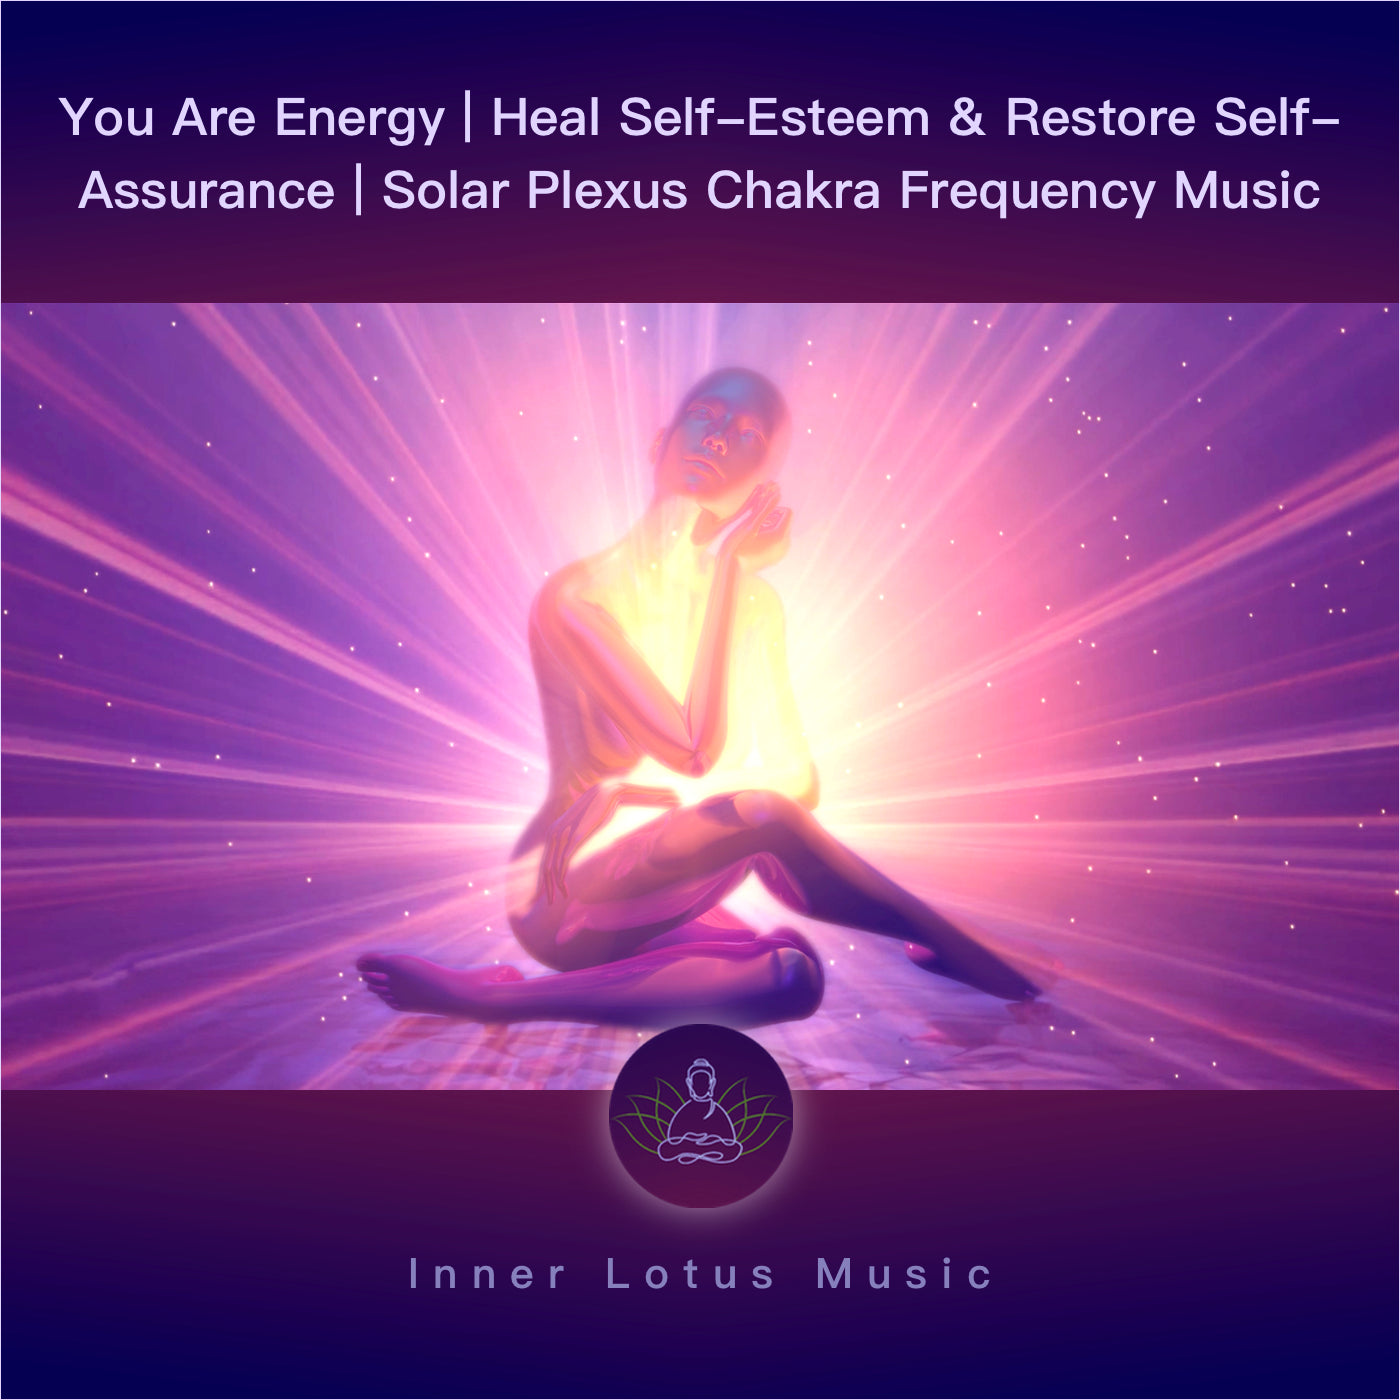 You Are Energy | Heal Self-Esteem & Restore Self-Assurance | Solar Plexus Chakra Frequency Music